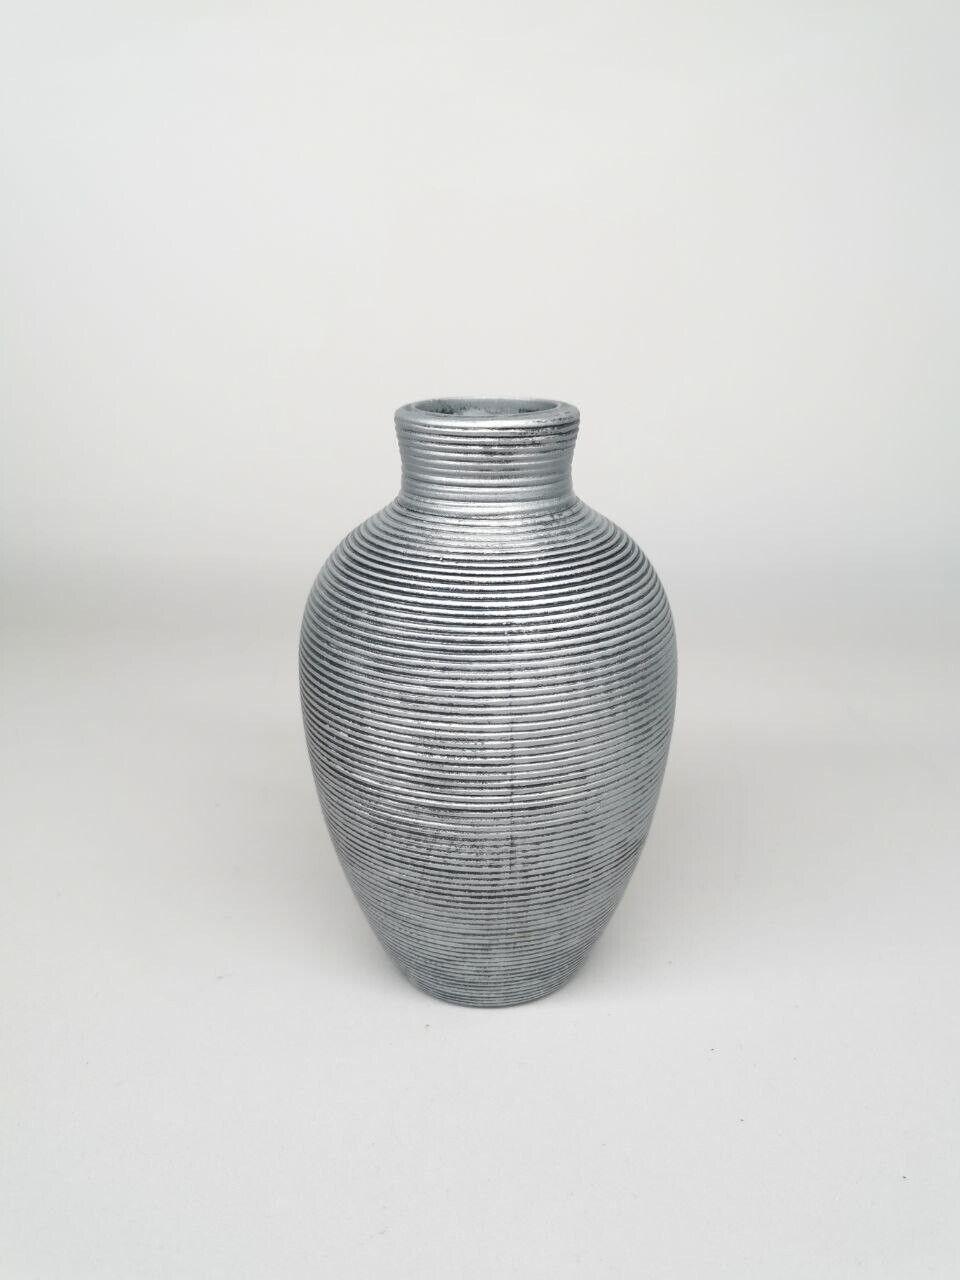 Ceramic Vases for Living Room Silver Flower Vase Small Handmade Vintage - Massive Discounts